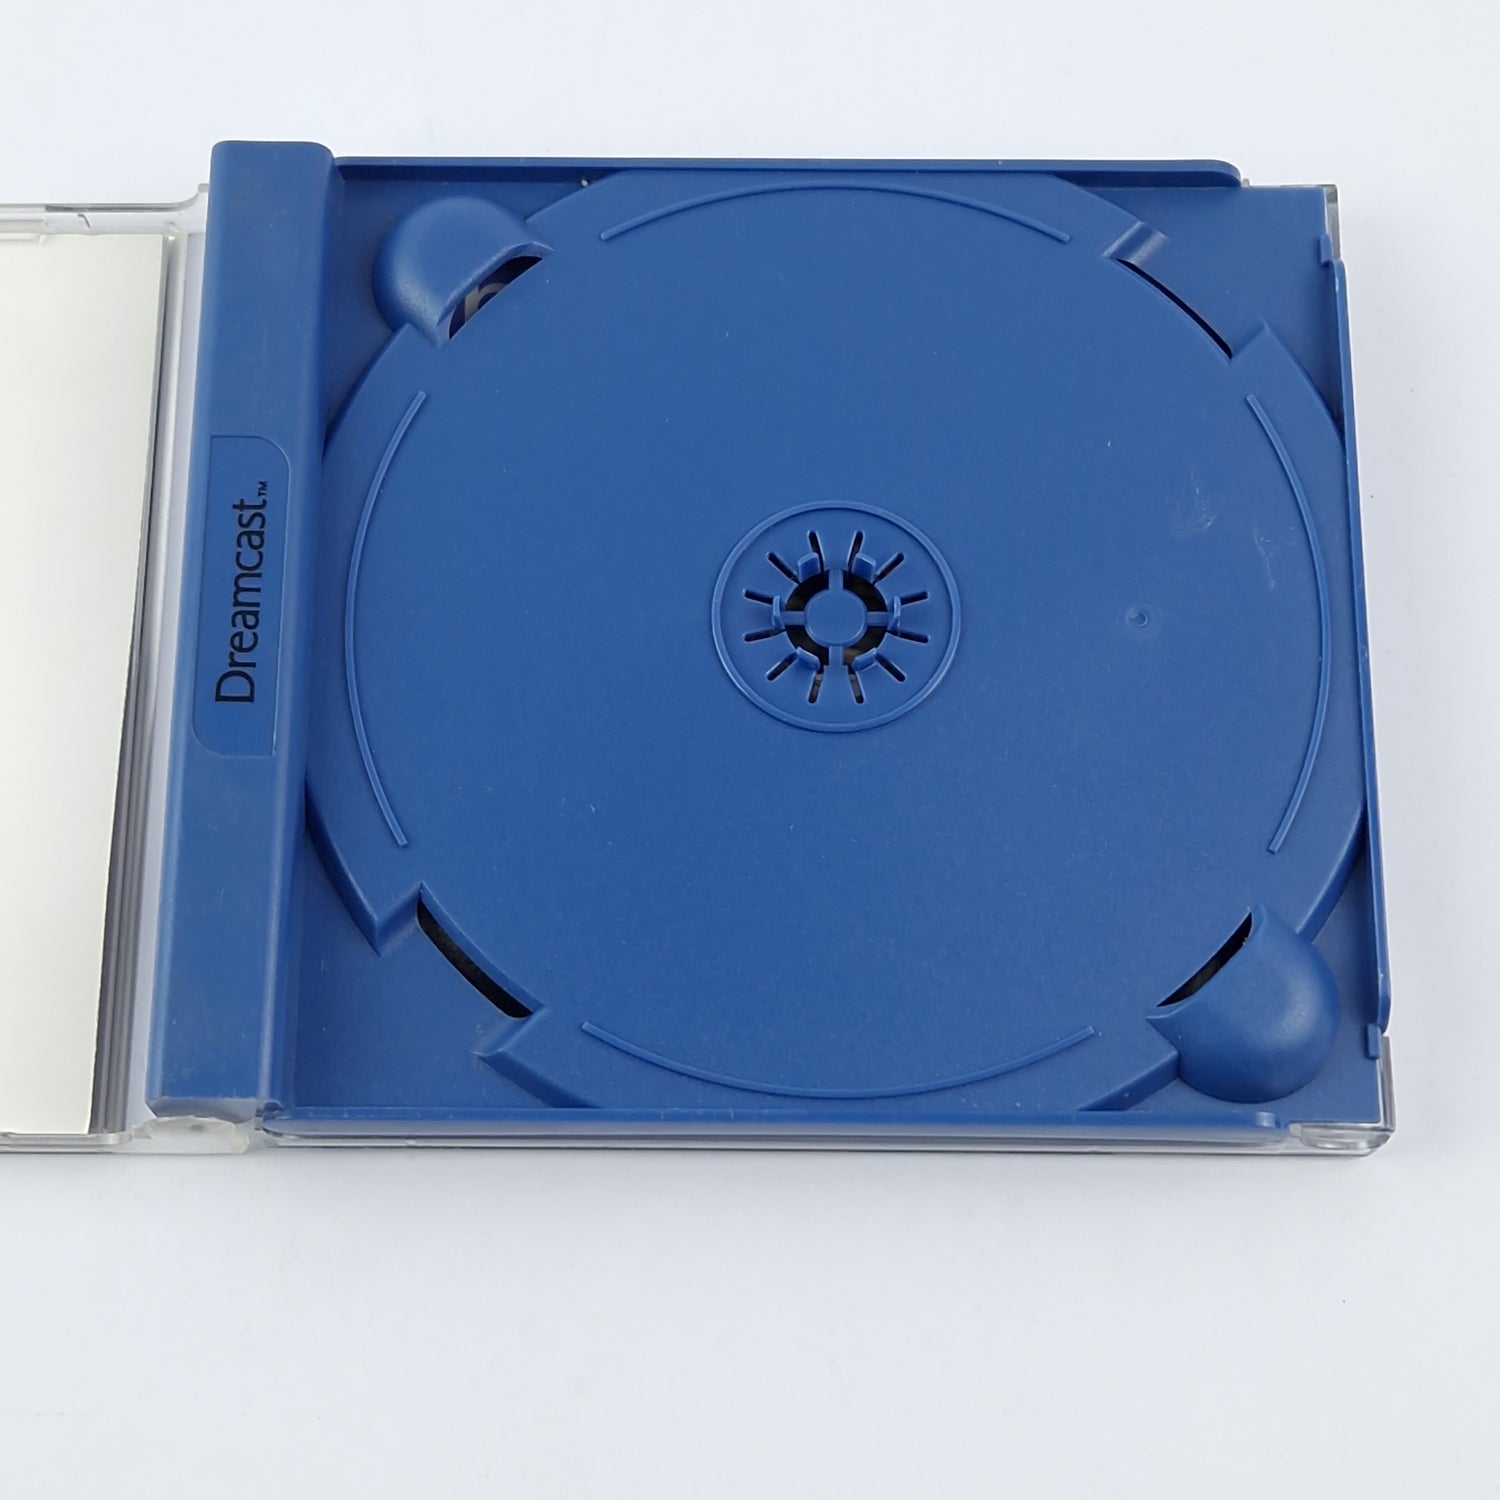 Sega Dreamcast Game: Dino Crisis - OVP Instructions CD / DC PAL Game Disk